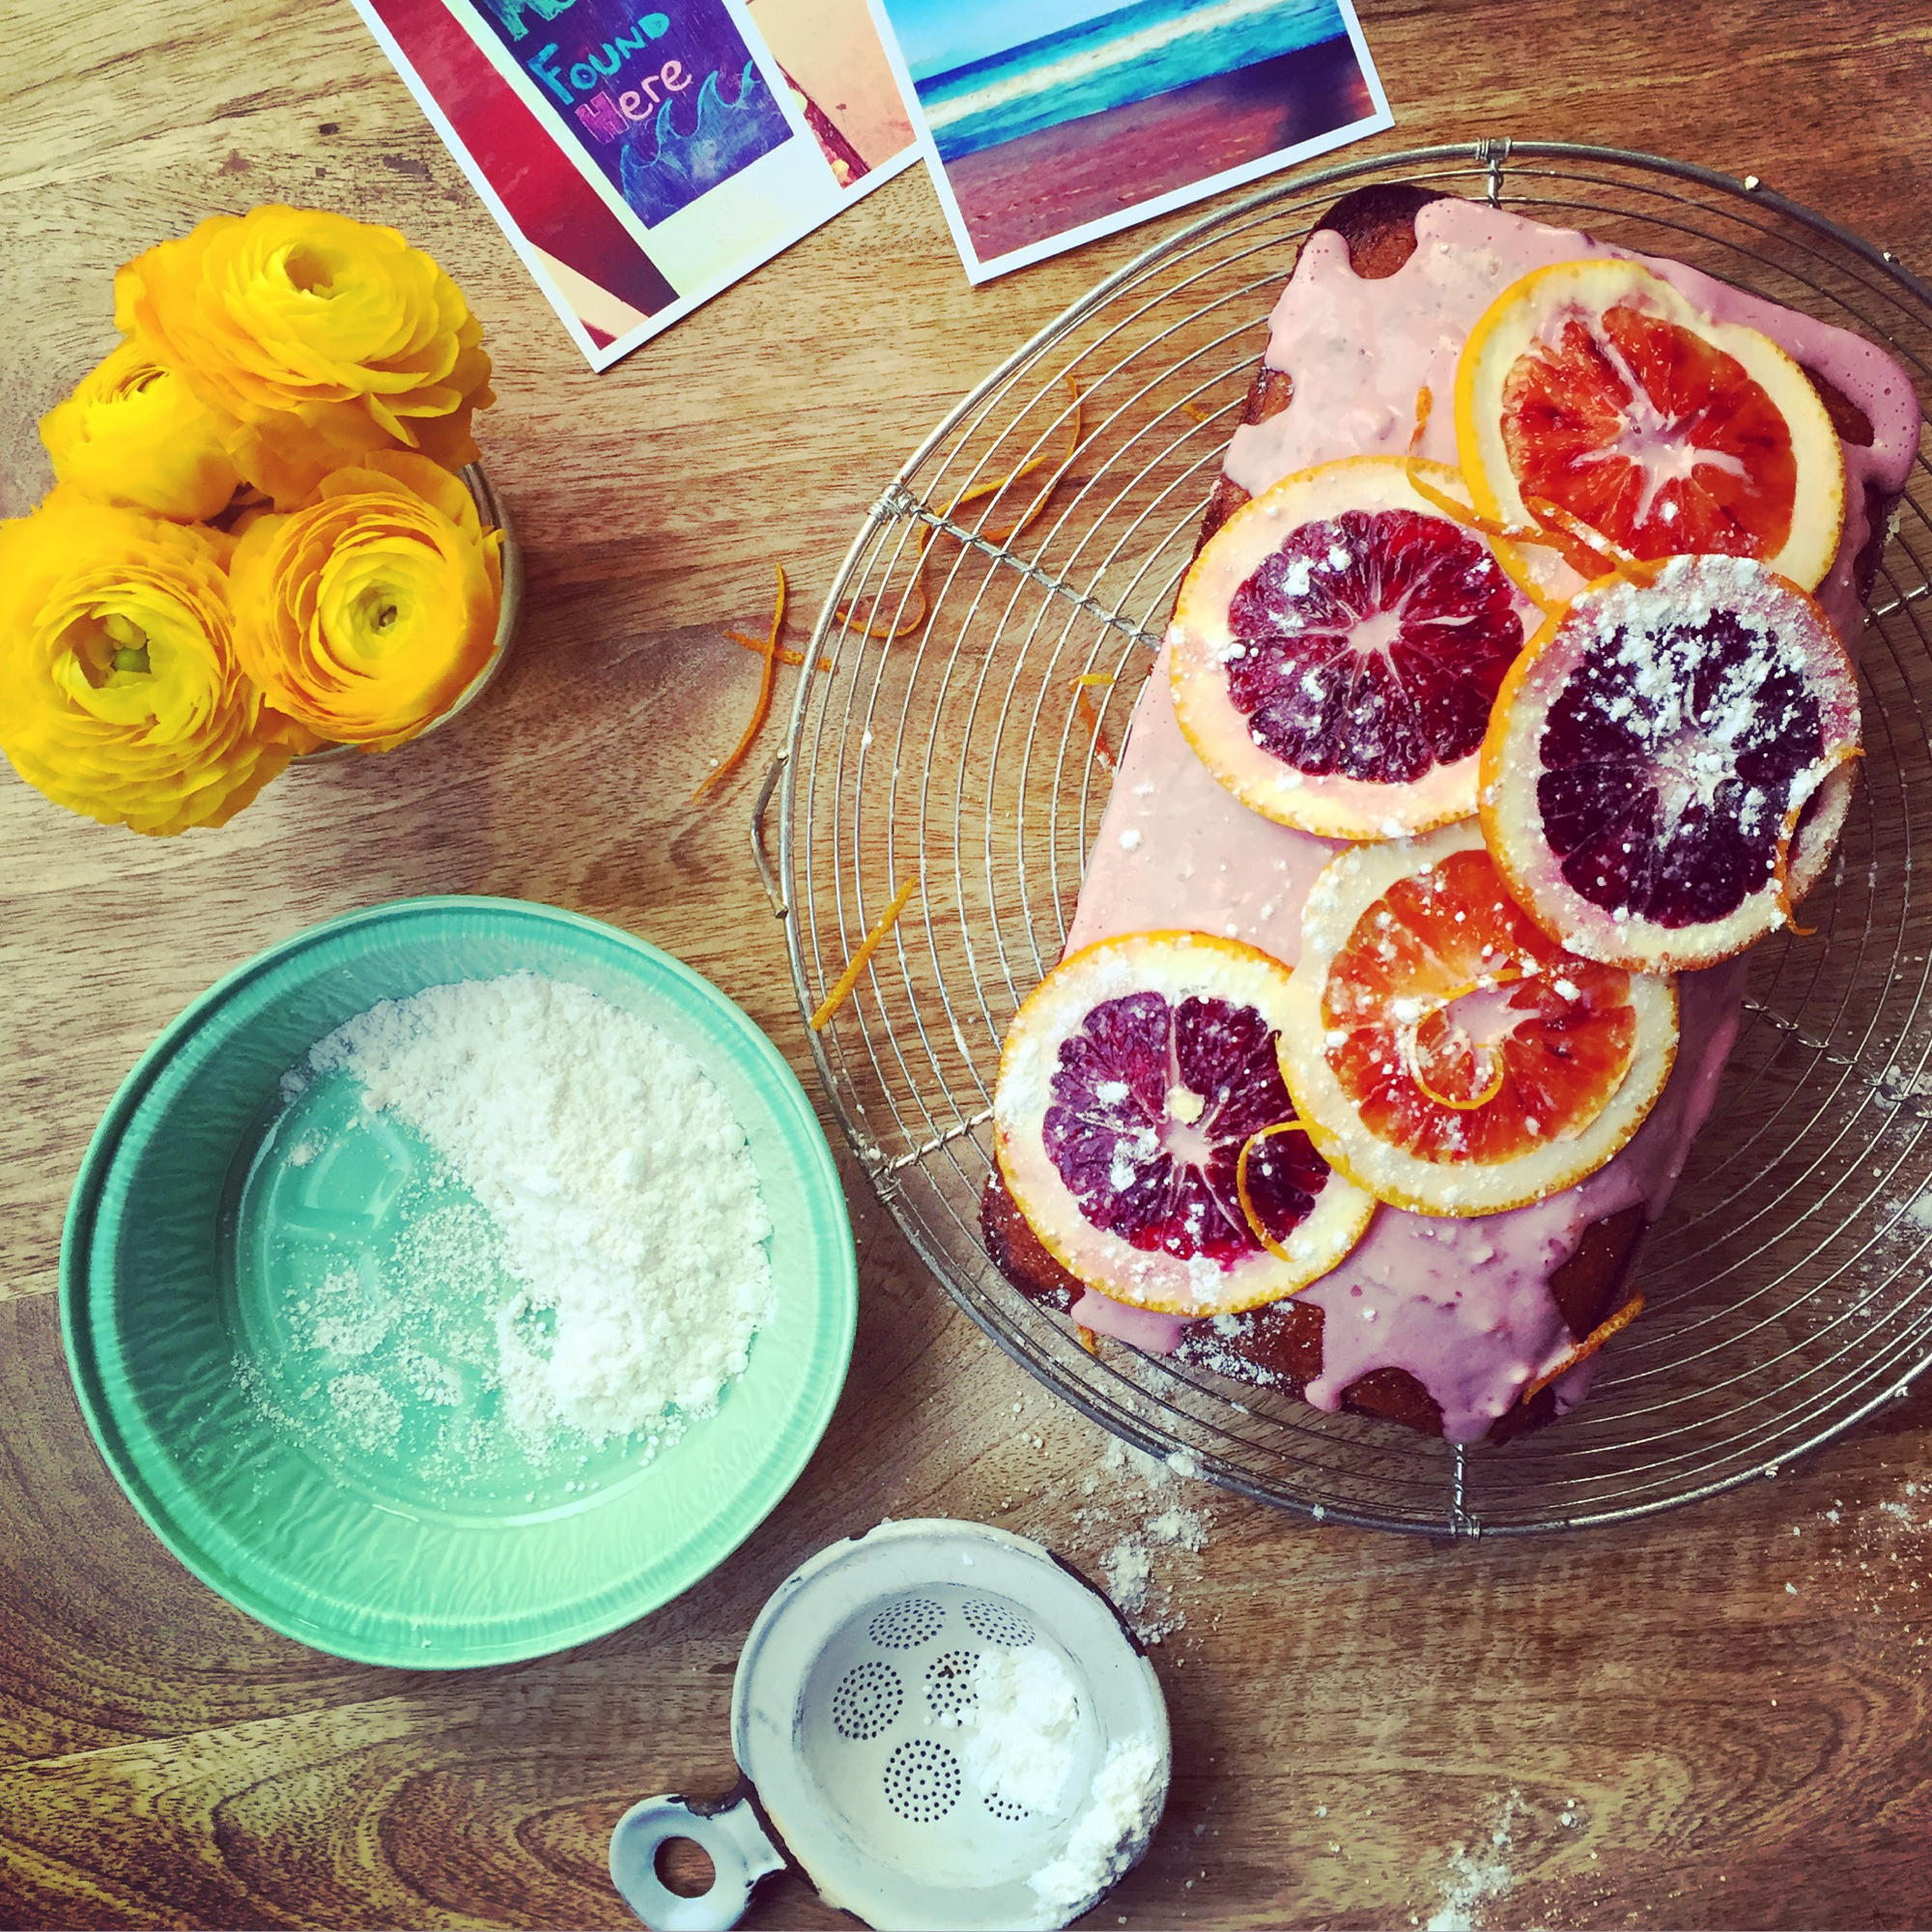 Featured image for “Almond Yogurt Cake with Citrus Glaze”